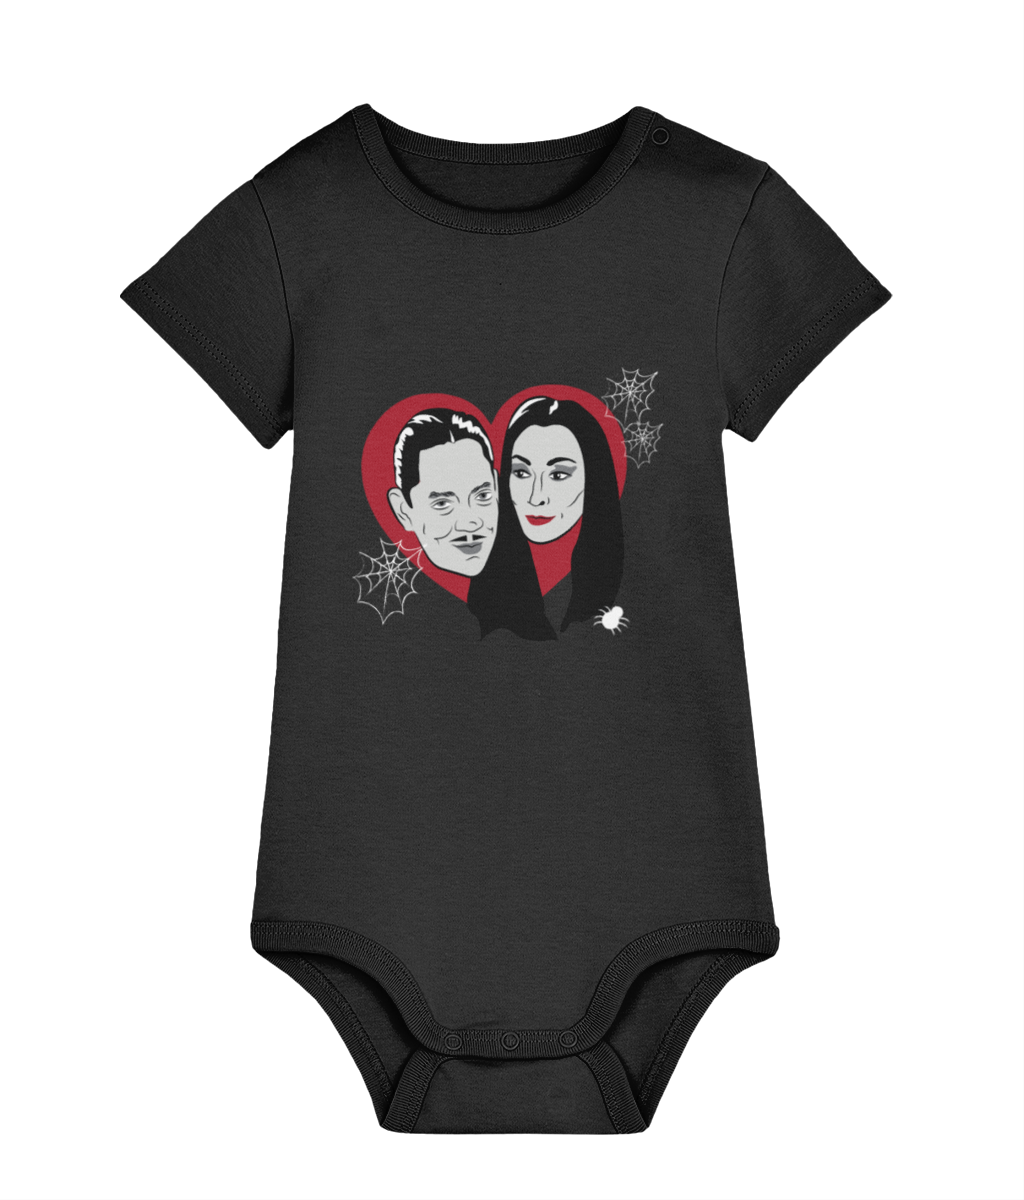 Addams Family baby grow